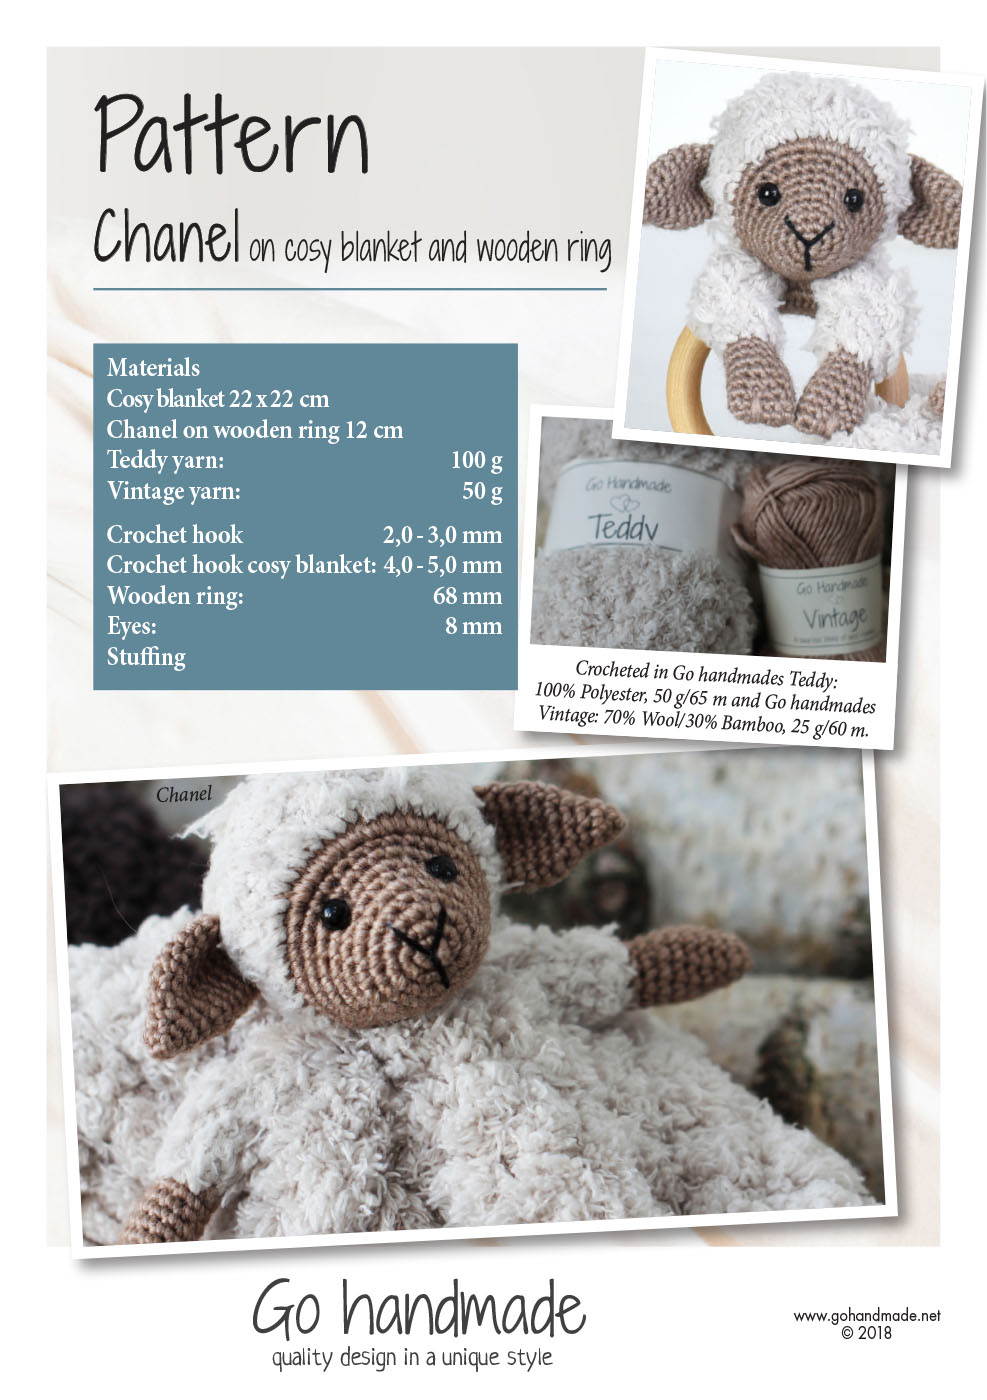 Chanel with blanket & ring - UK - Animals - Go handmade